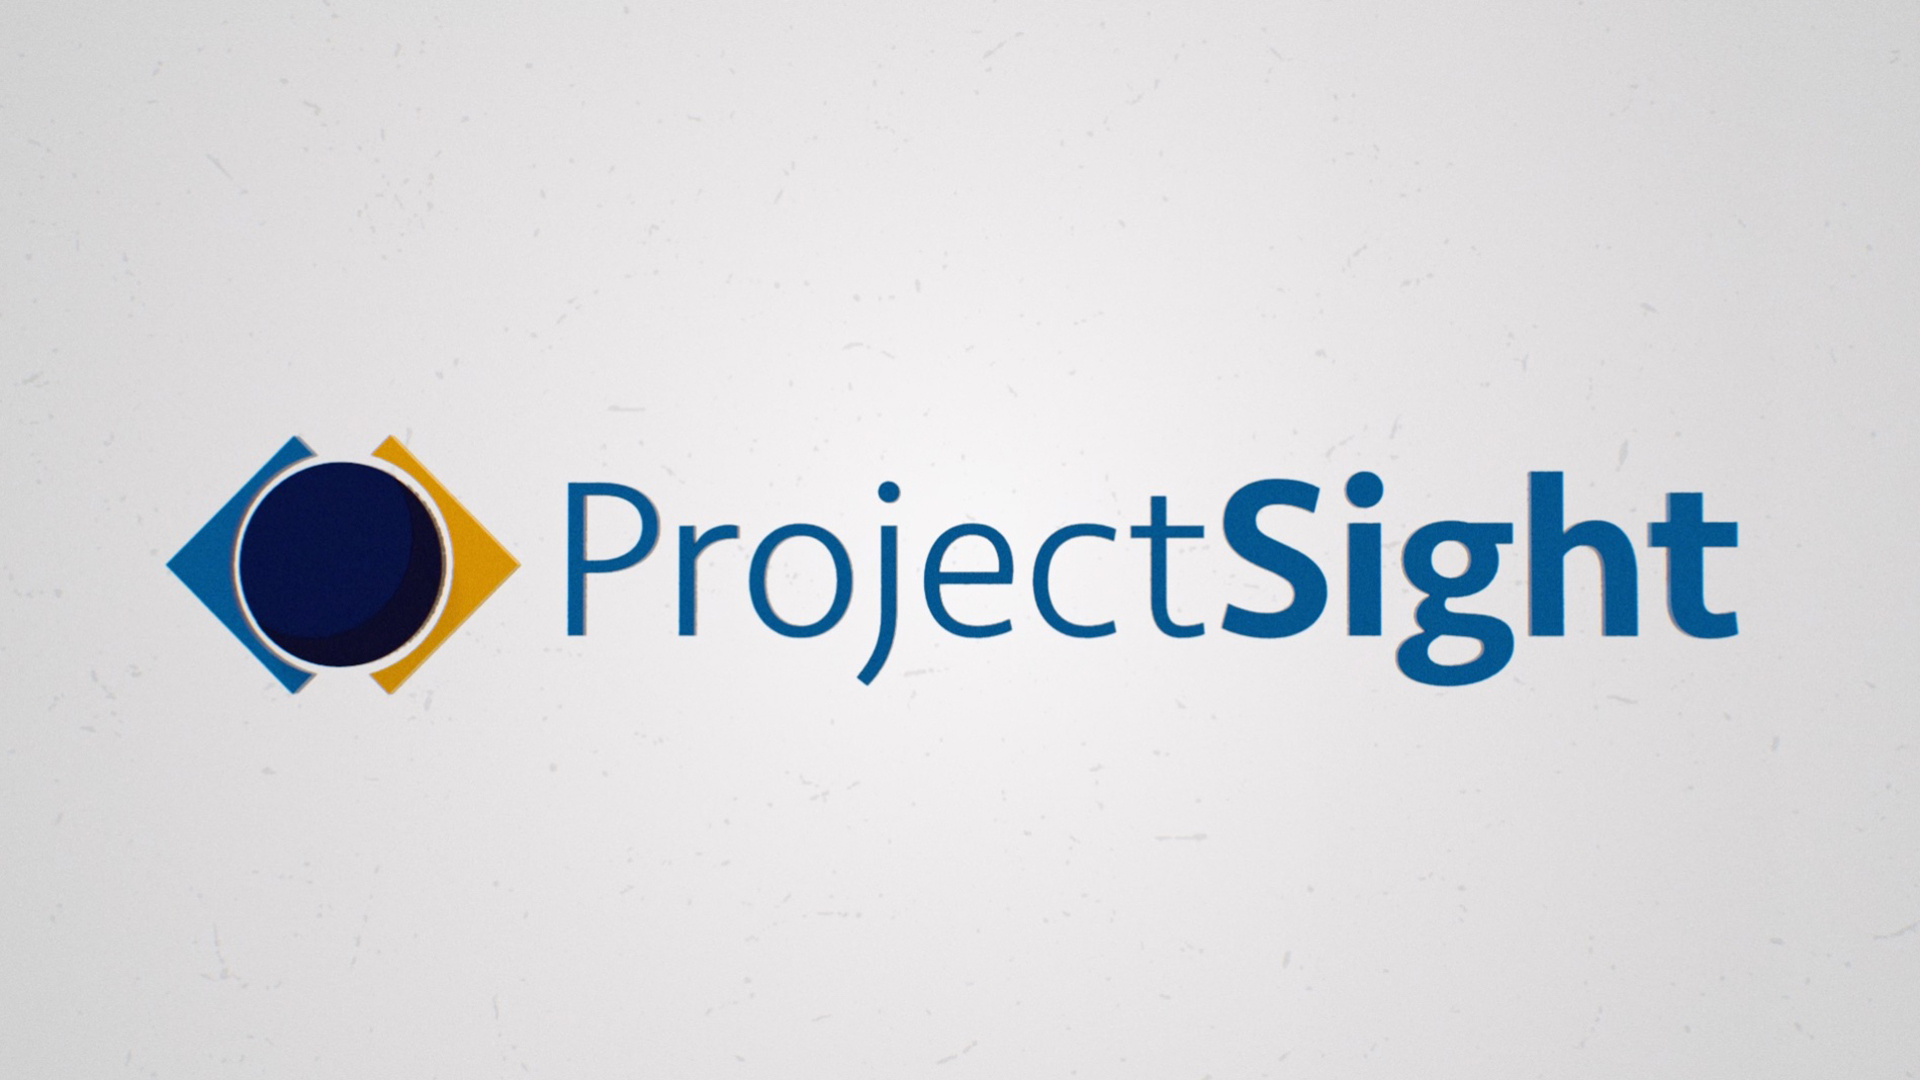 ProjectSight